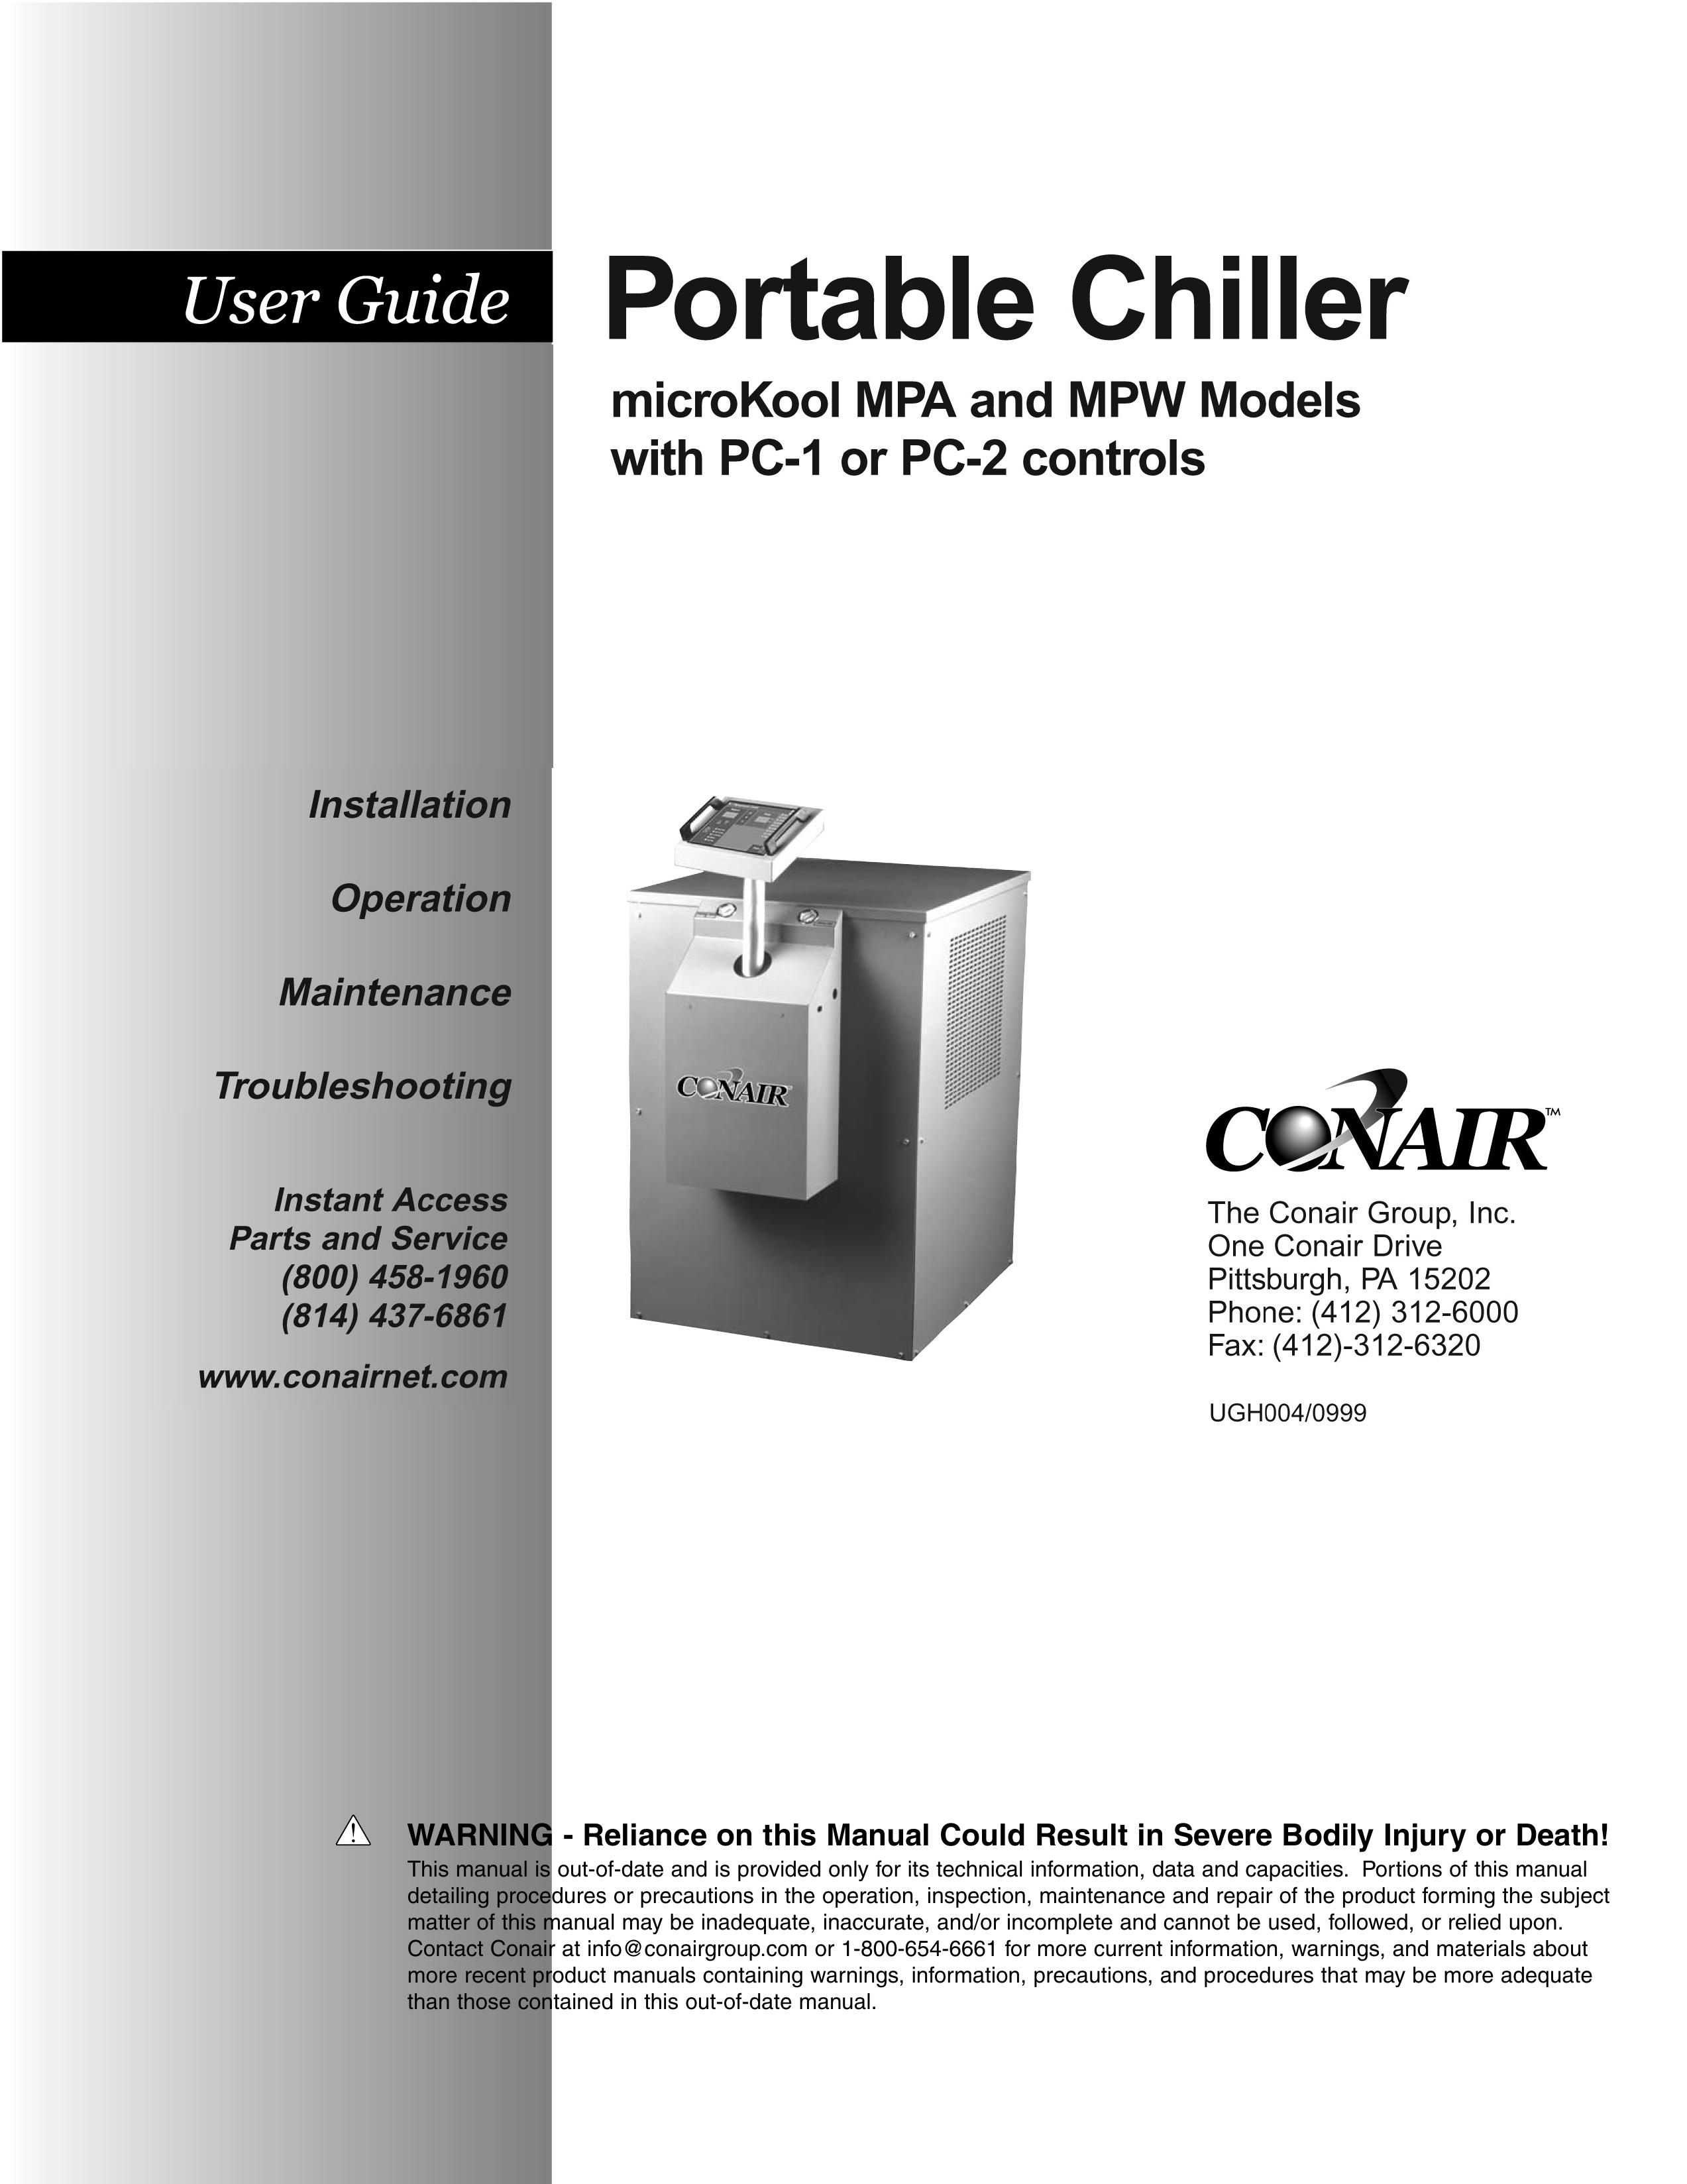 Conair MPW Refrigerator User Manual